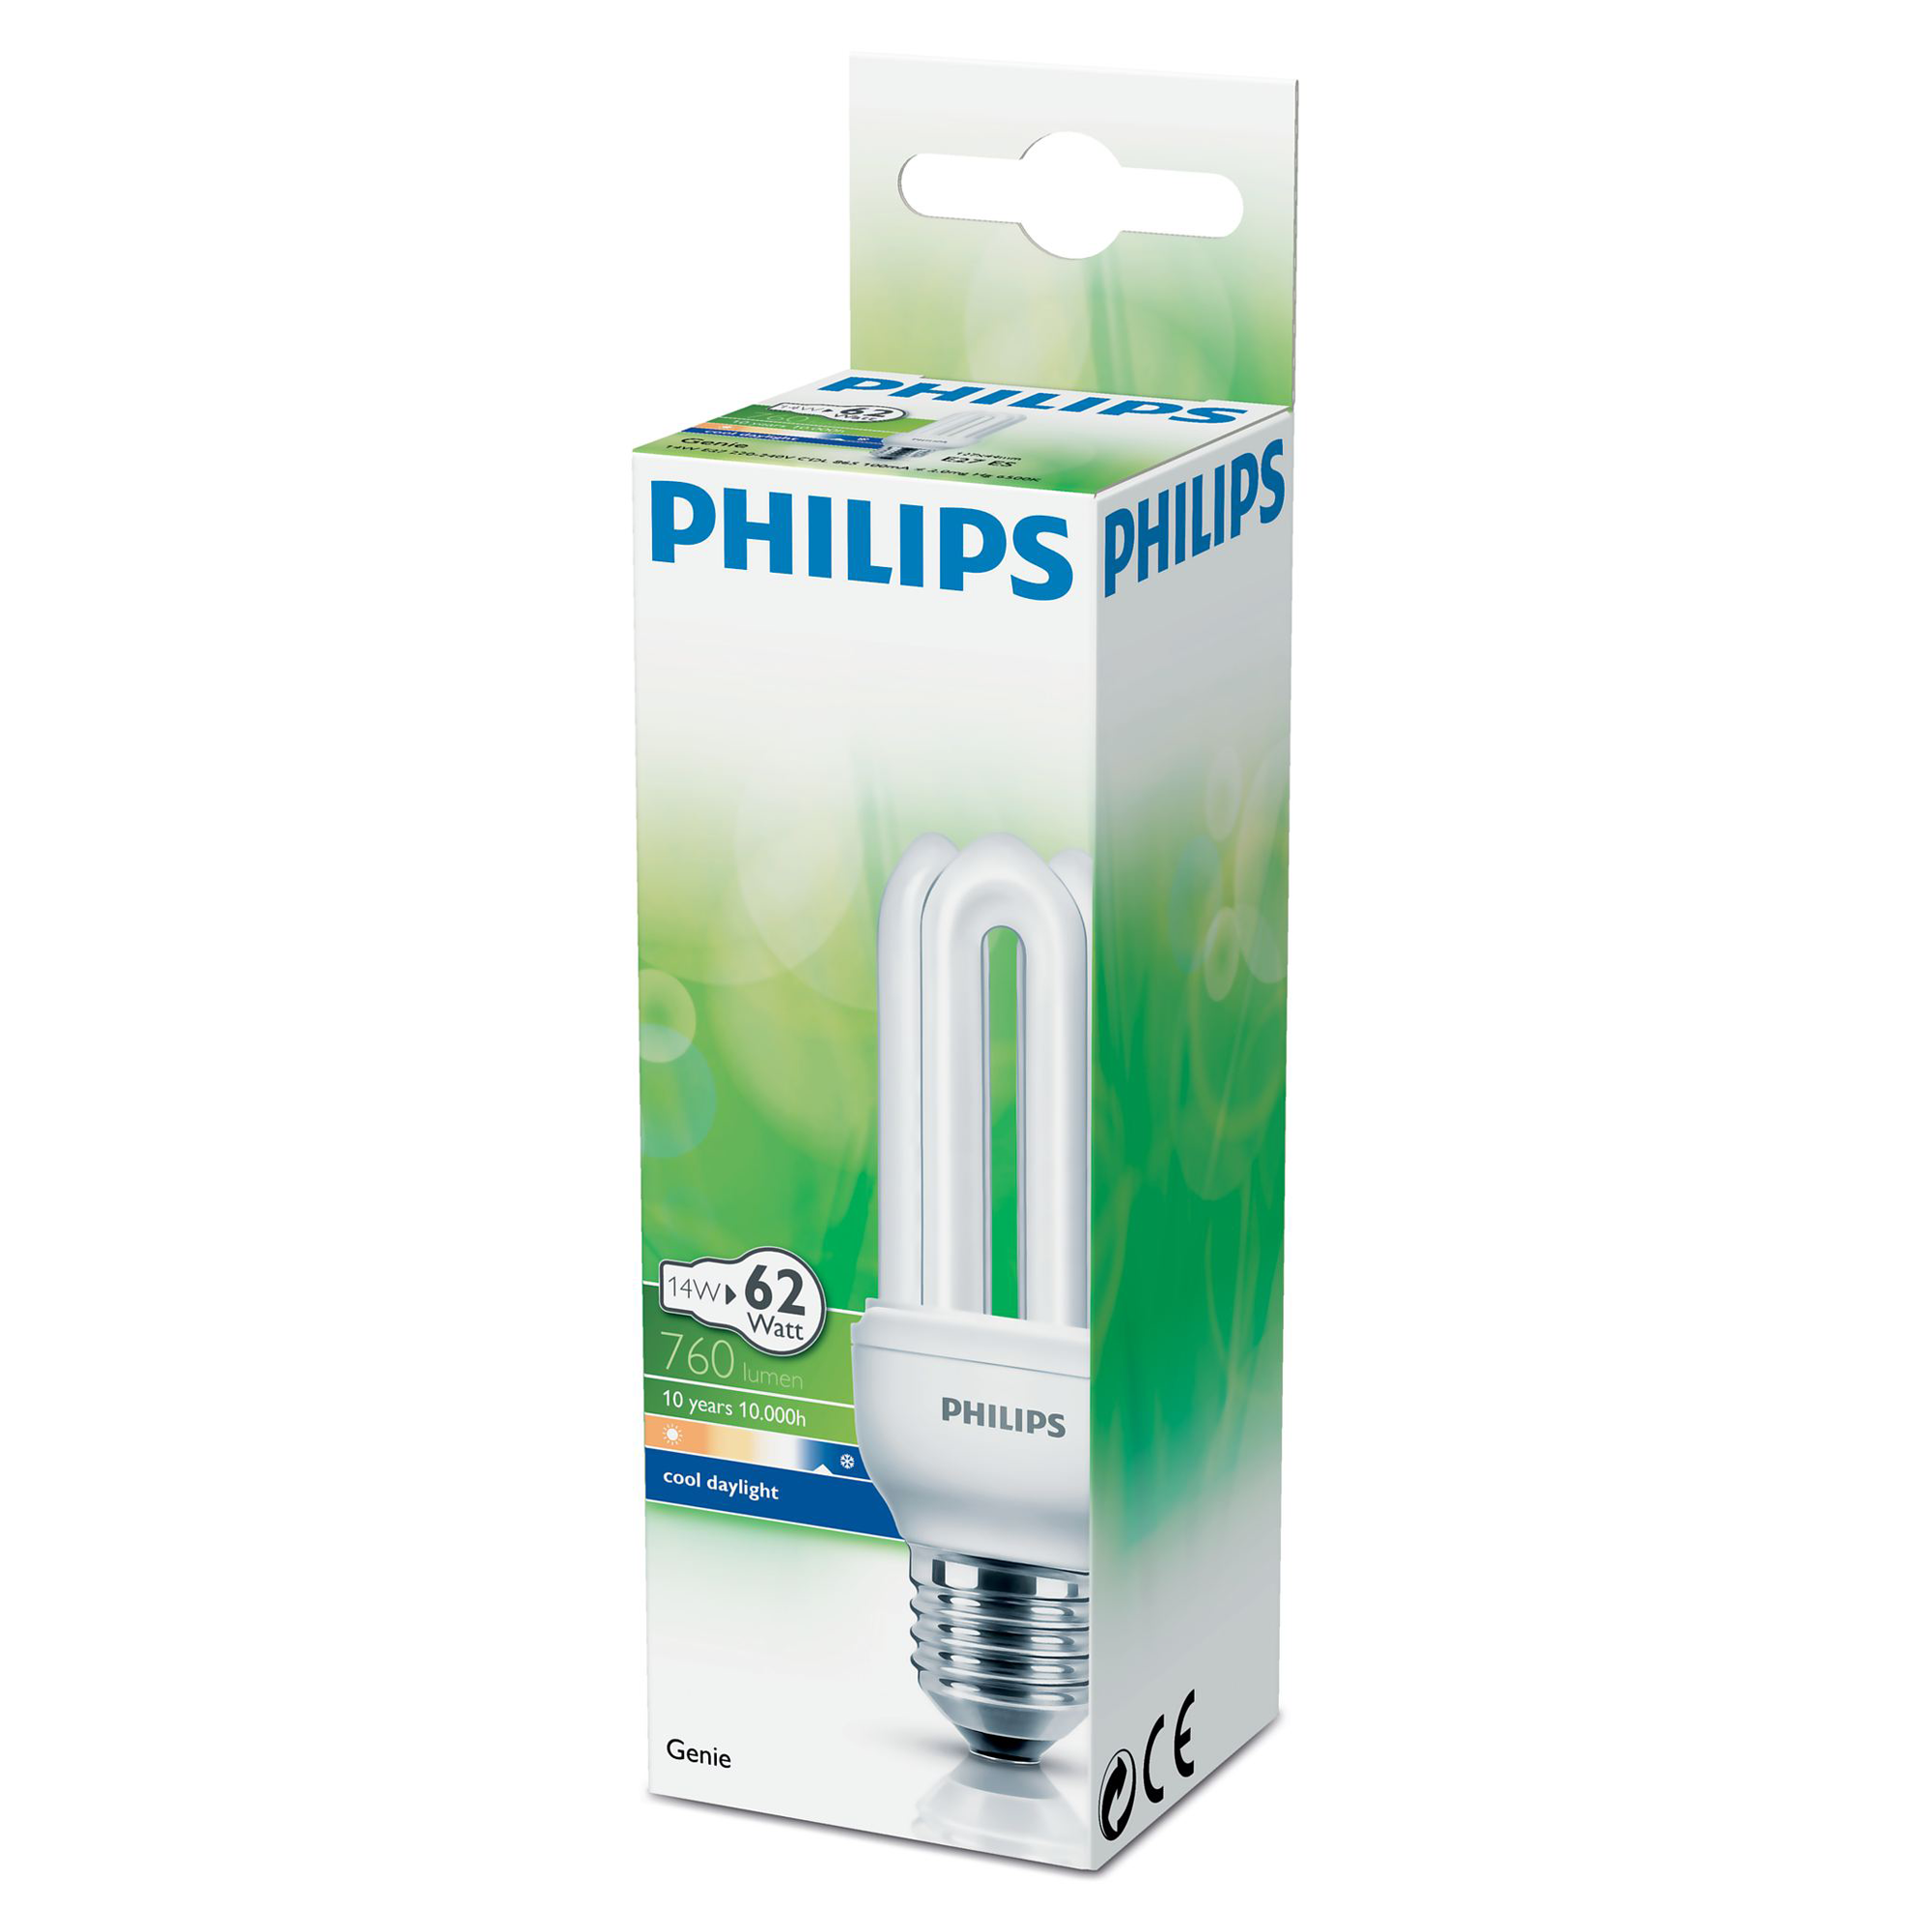 Philips-Licht GENIE ES 8YR14W Energiesparlampe 14W E27 230V warmton-ws 